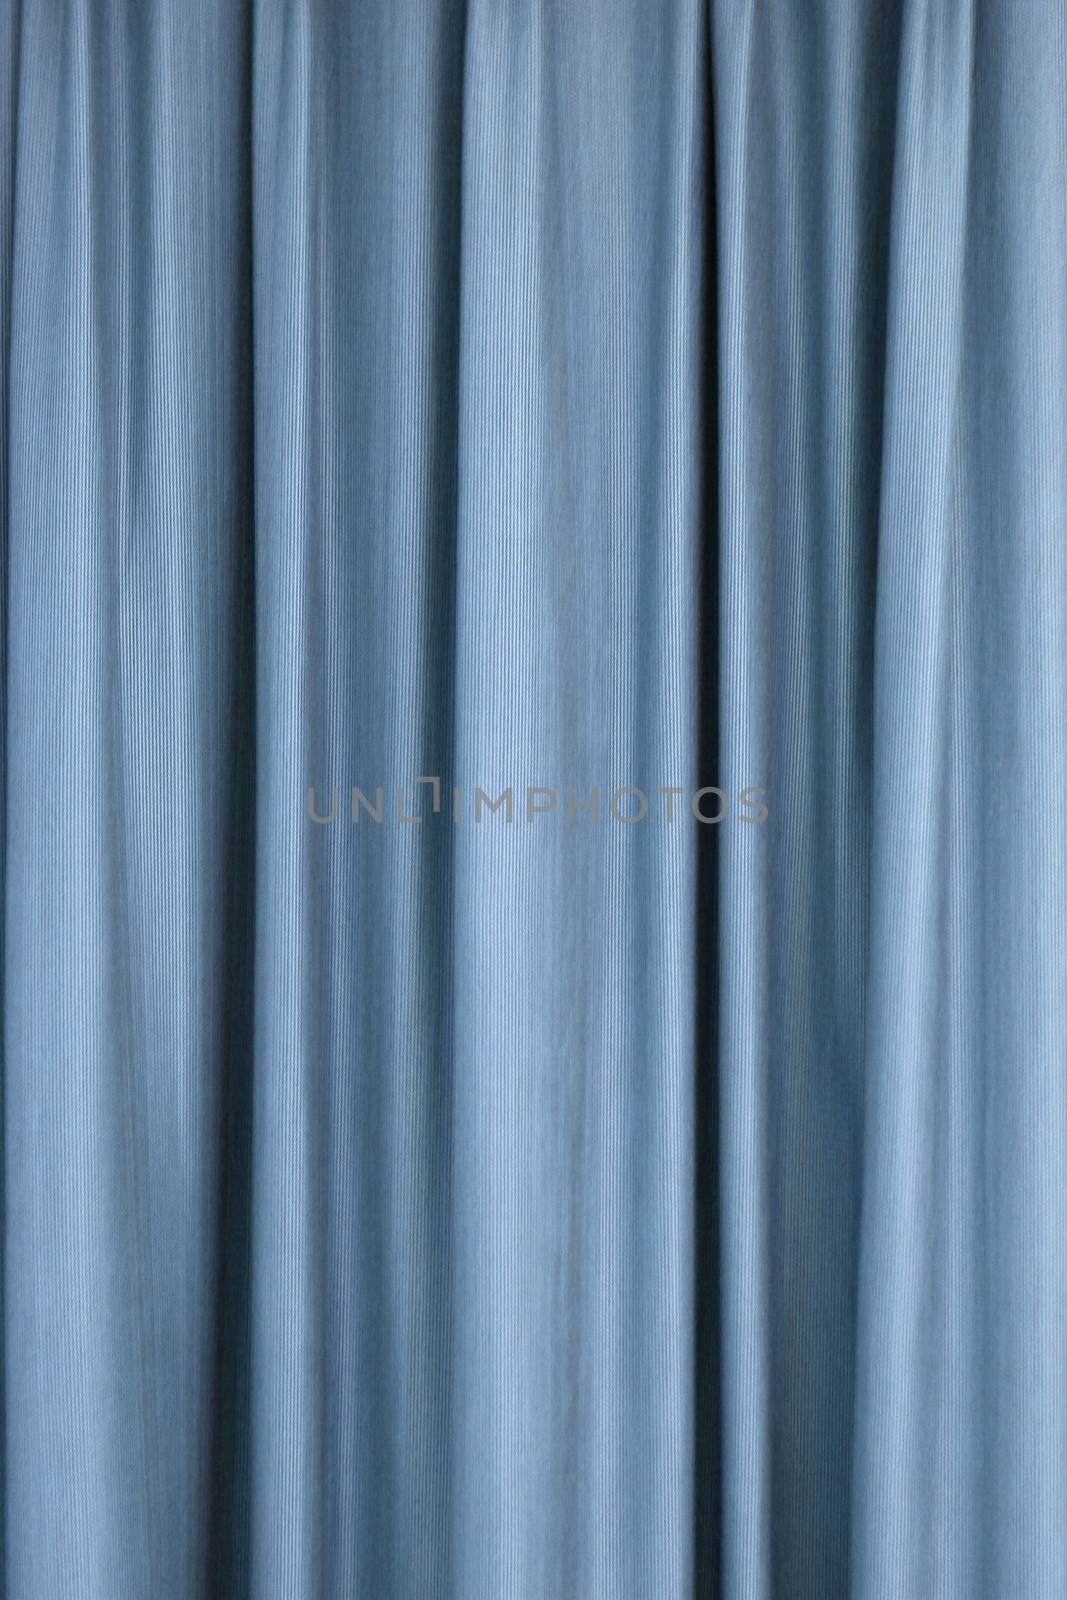 A close up conceptual shot of hanging curtains